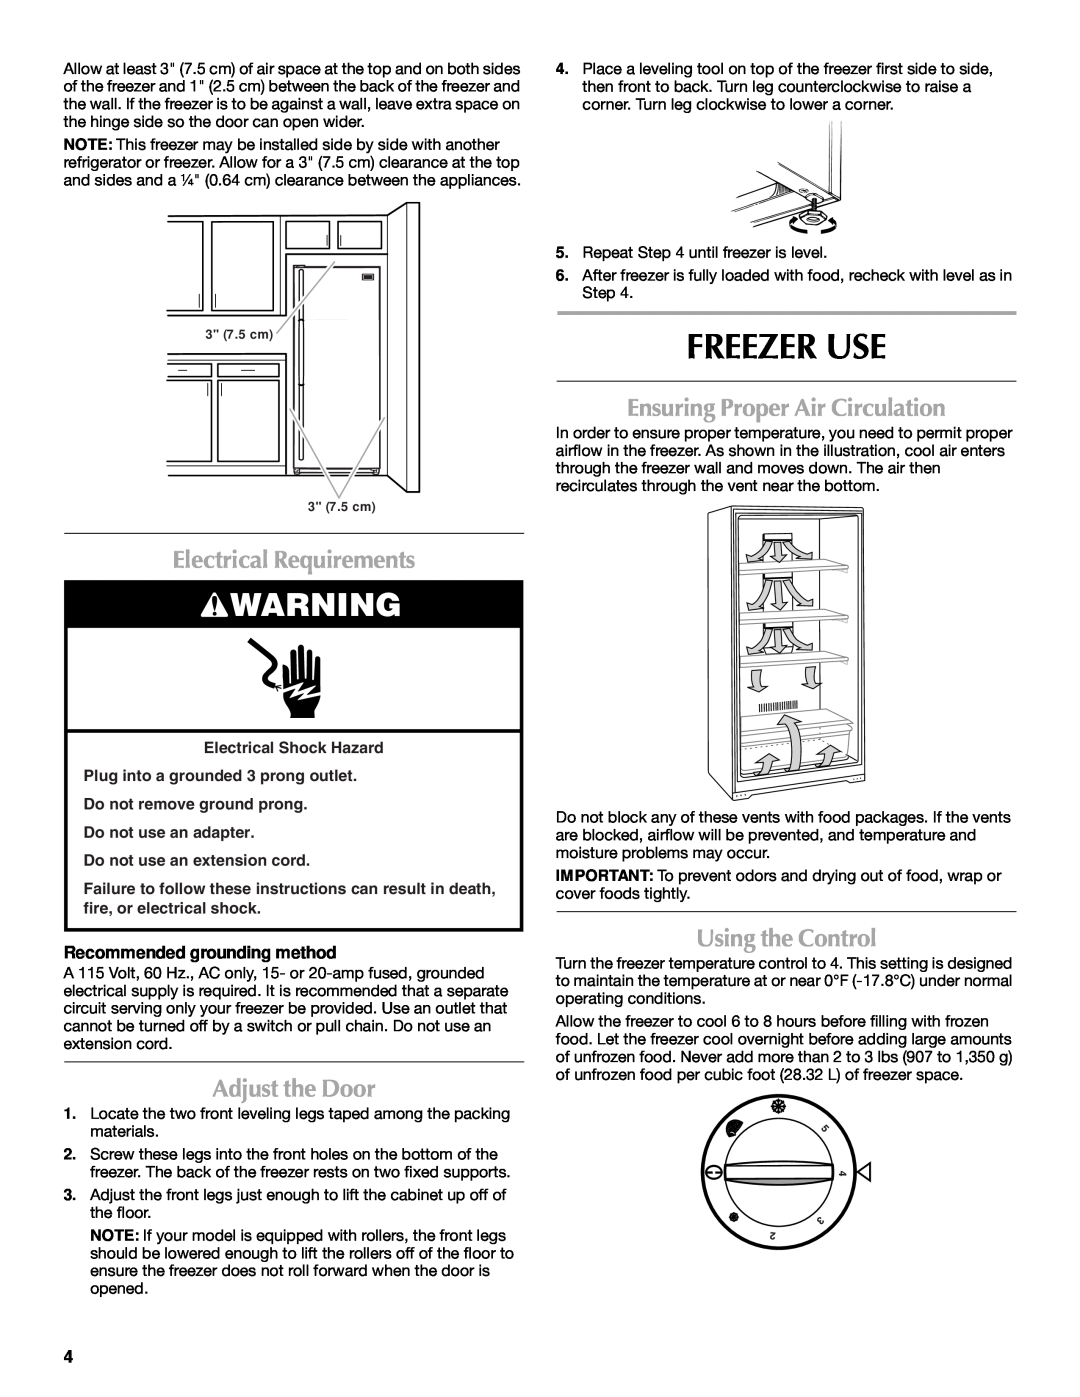 Maytag 1-82180-002 manual Freezer Use, Electrical Requirements, Adjust the Door, Ensuring Proper Air Circulation 